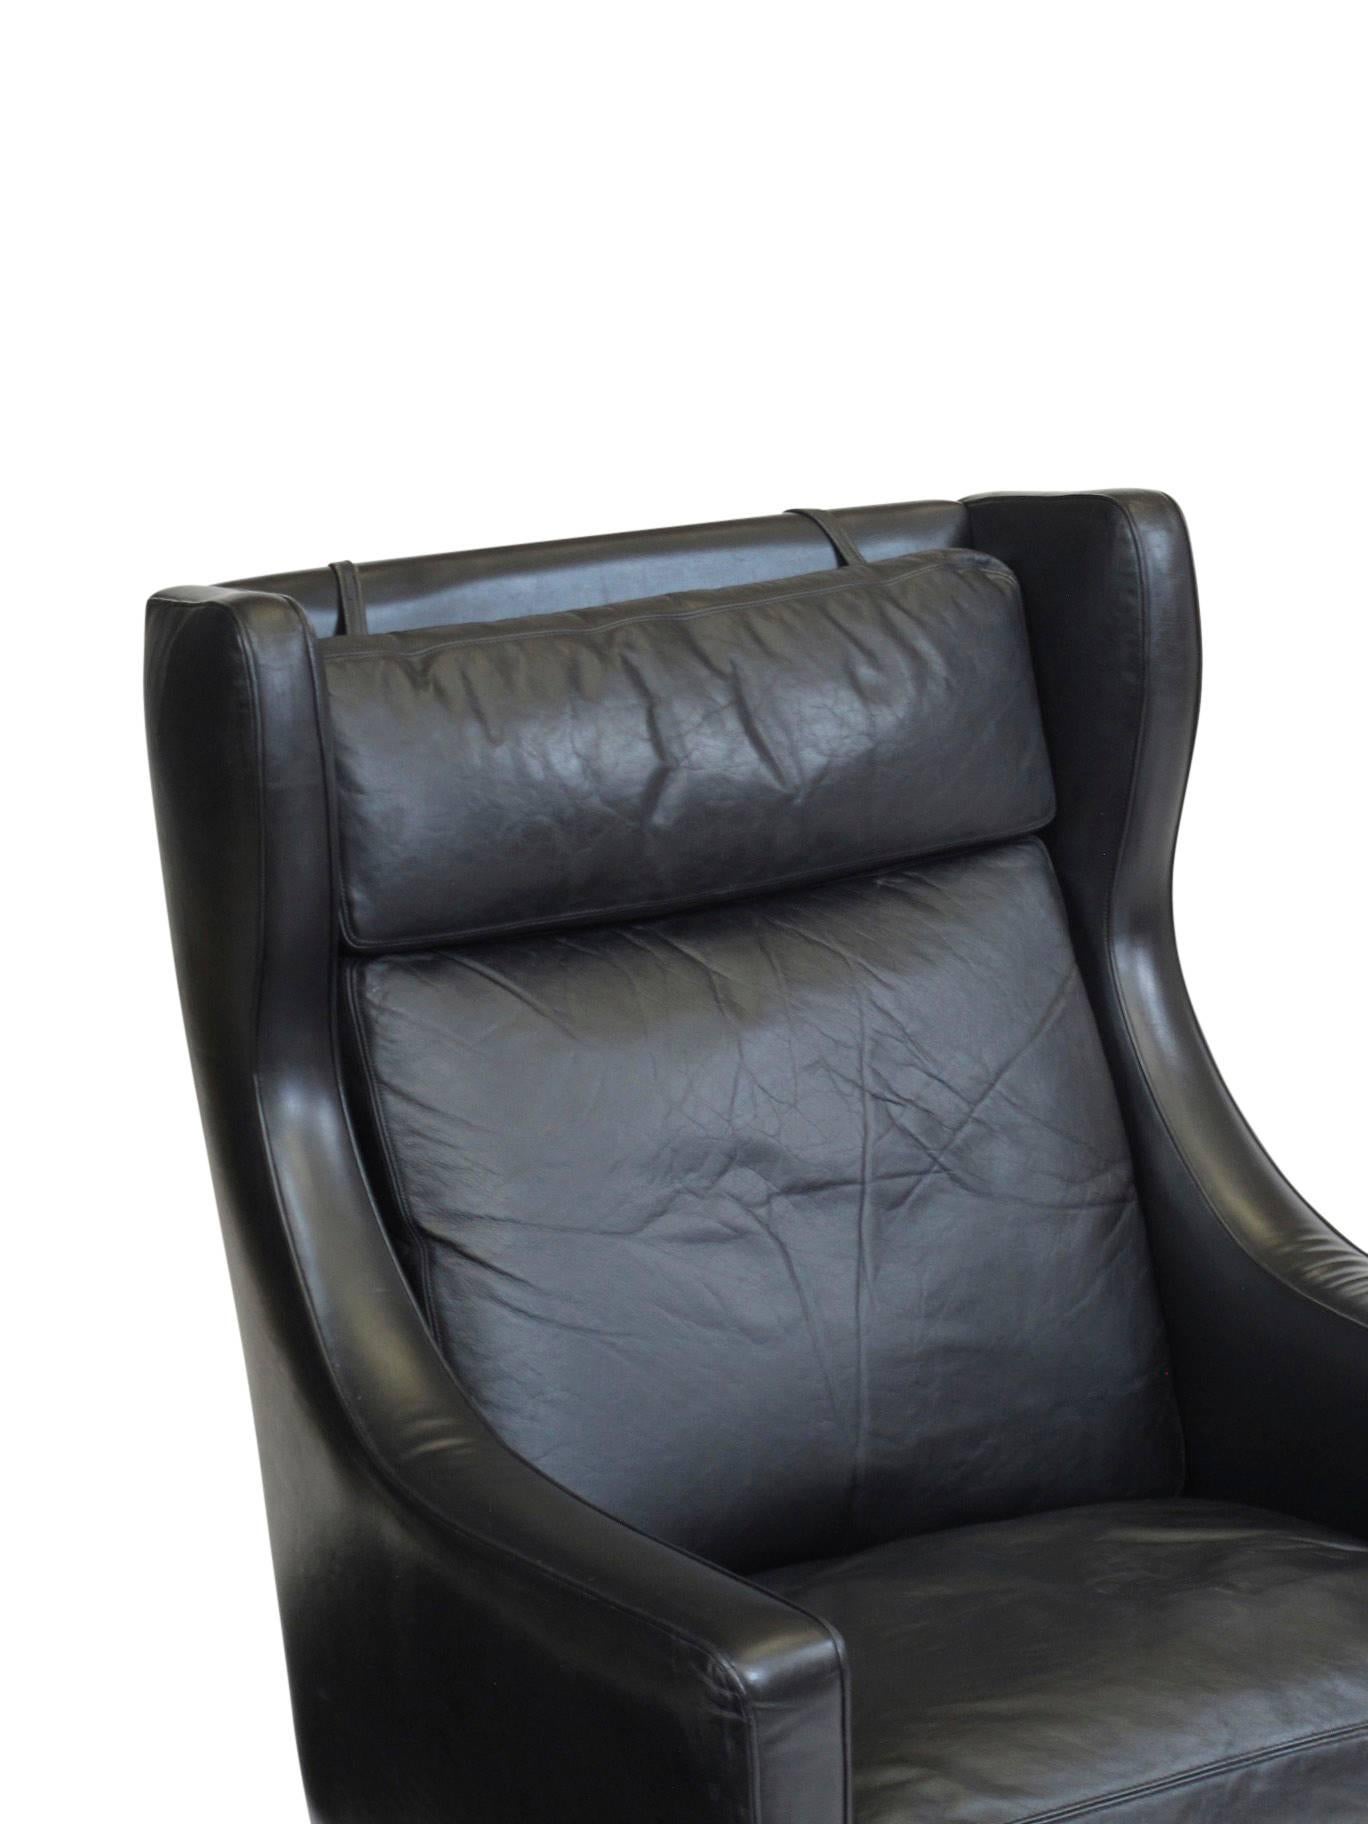 Fredrik Kayser Rosewood and Black Leather High-Back Danish Lounge Chair 2